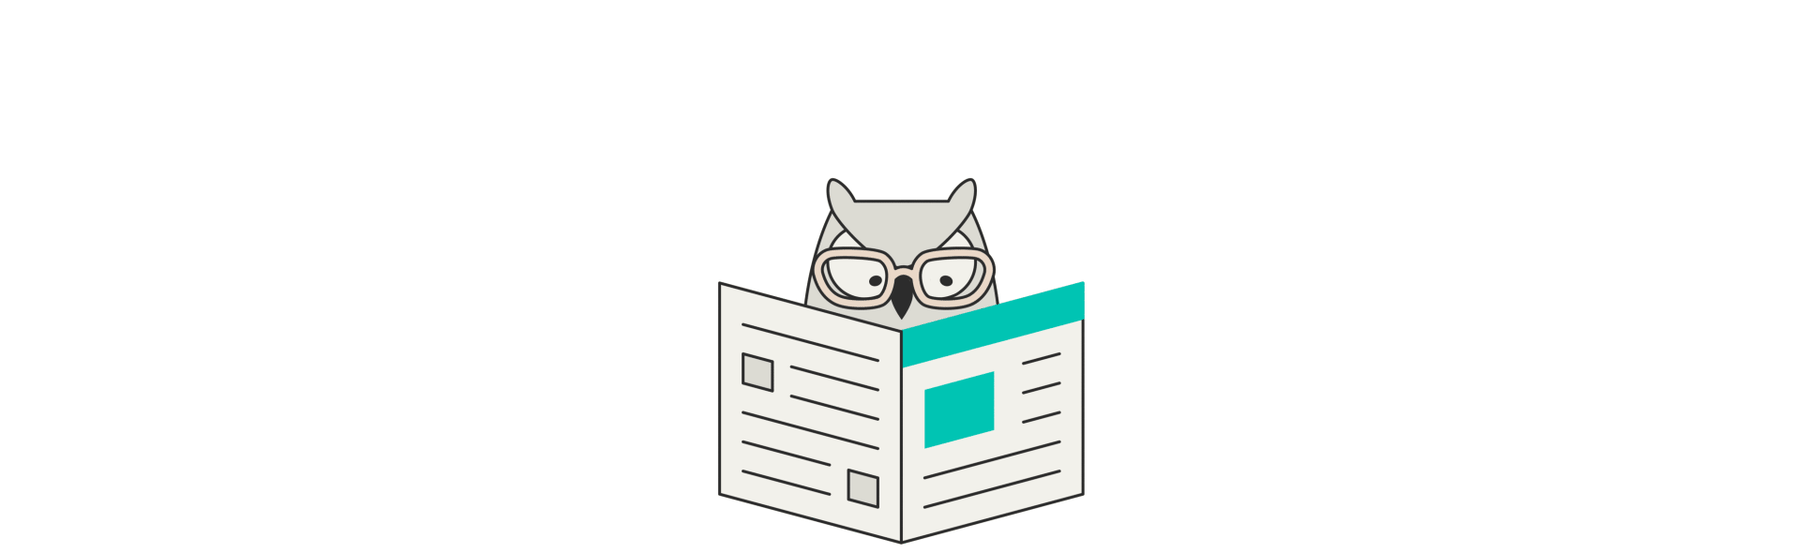 Owl reading a newspaper